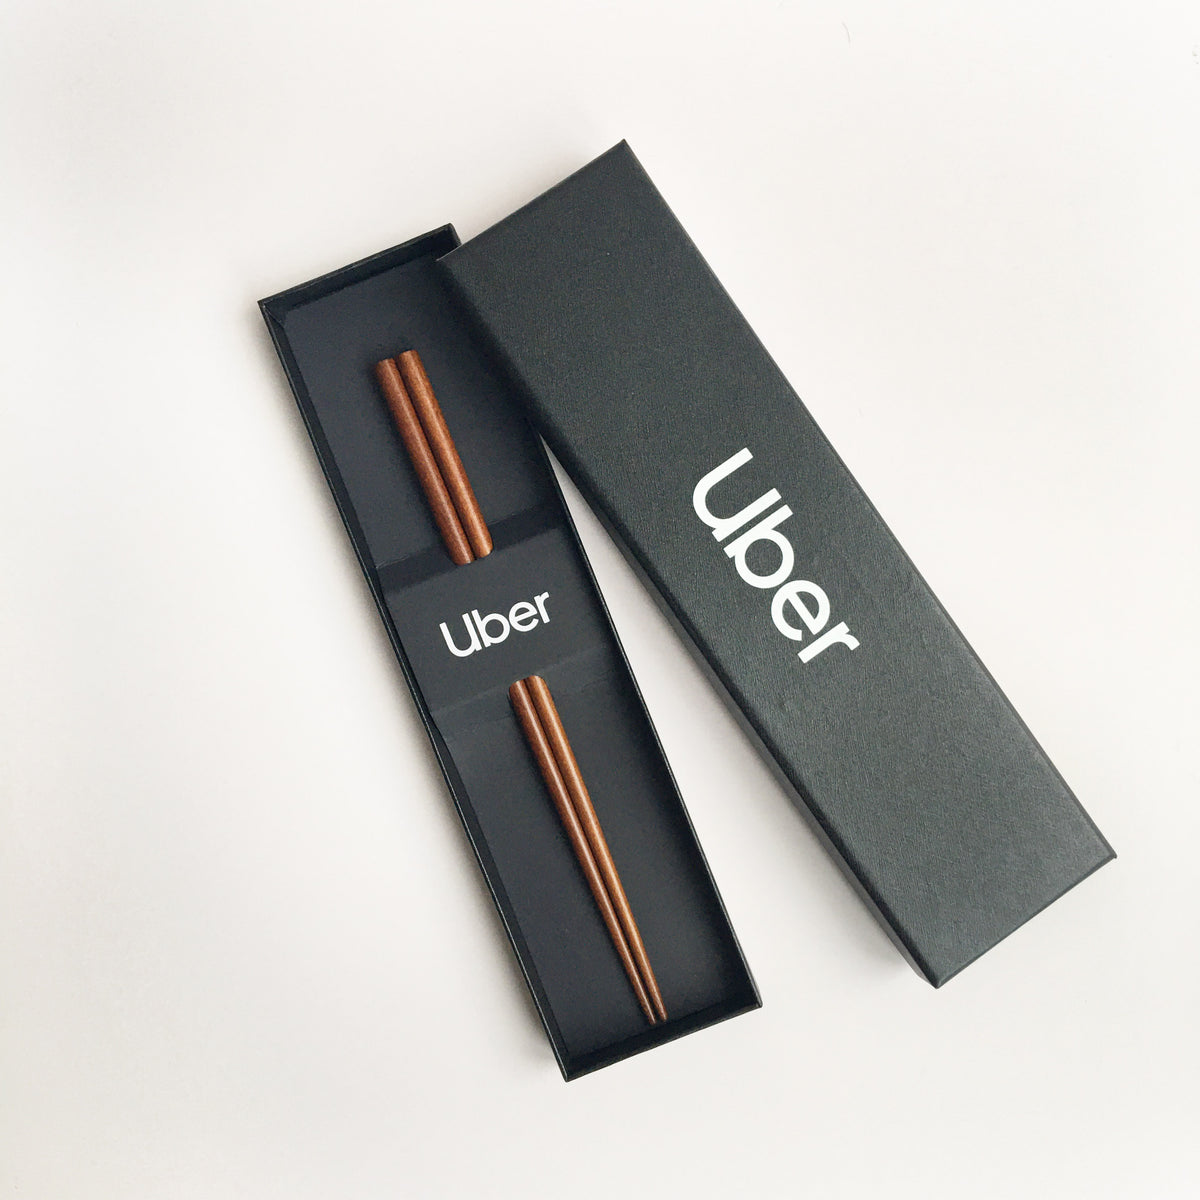 [Case Studies]Uber | Wood Chopsticks